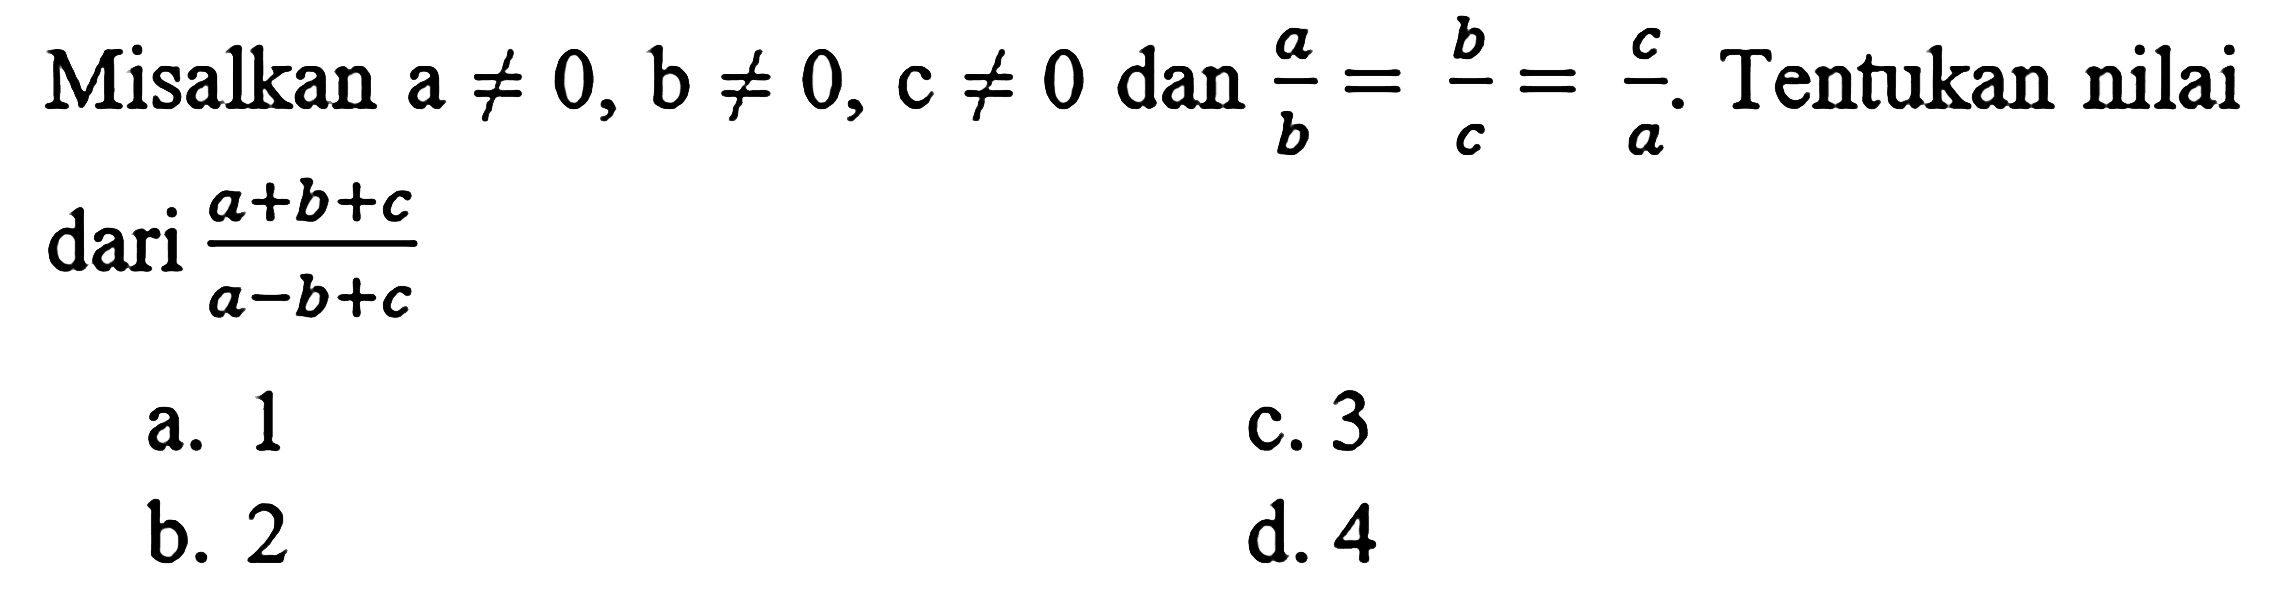 Misalkan  a =/= 0, b =/= 0, c =/= 0  dan  (a)/(b)=(b)/(c)=(c)/(a) . Tentukan nilai dari  (a+b+c)/(a-b+c) 
a. 1
c. 3
b. 2
d. 4